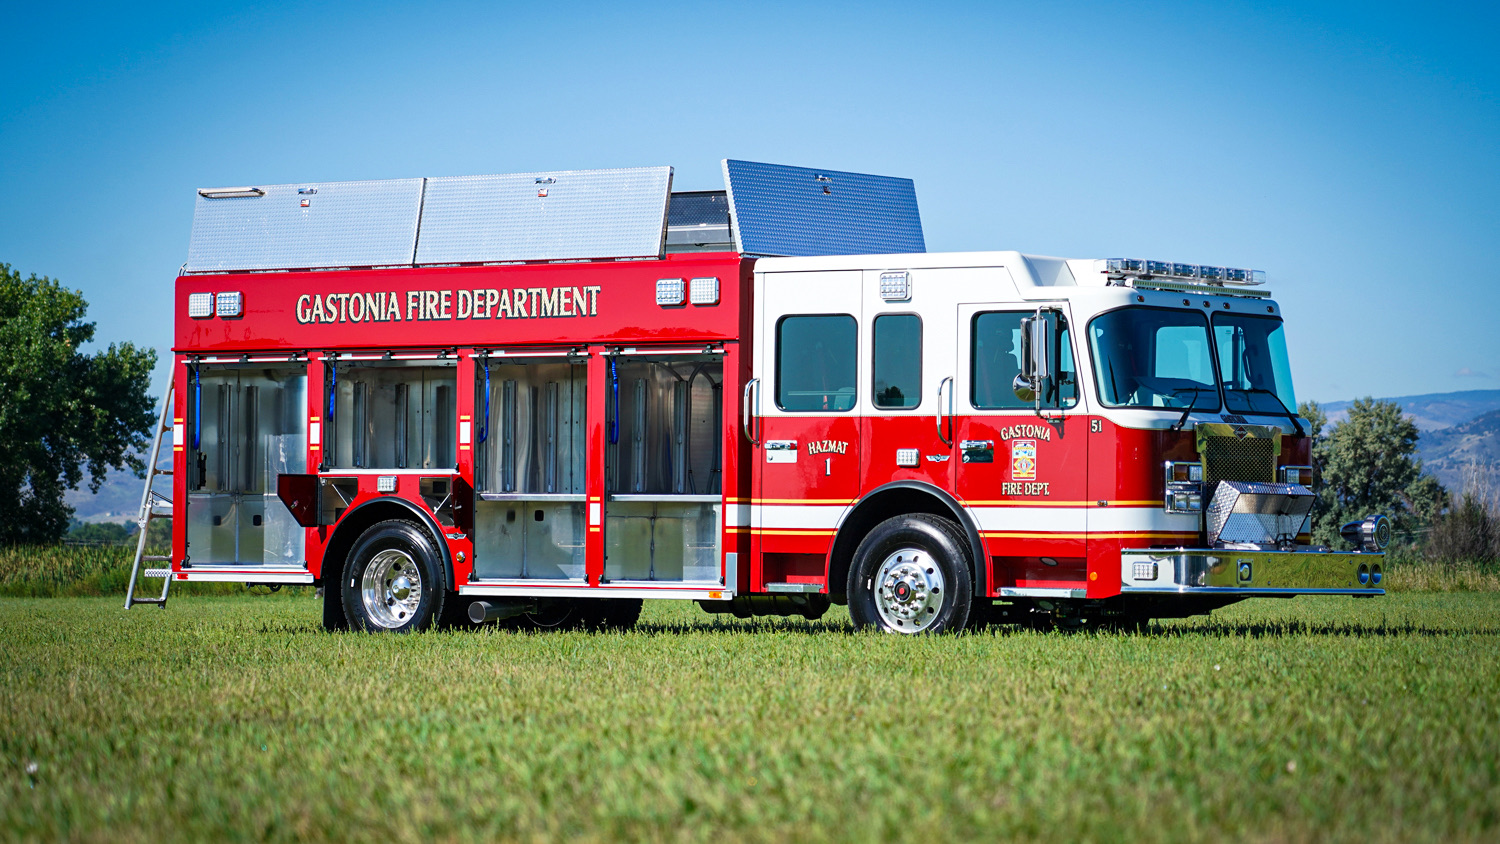 Featured image for “Gastonia Fire Department, Gastonia (NC) Hazmat #1231”